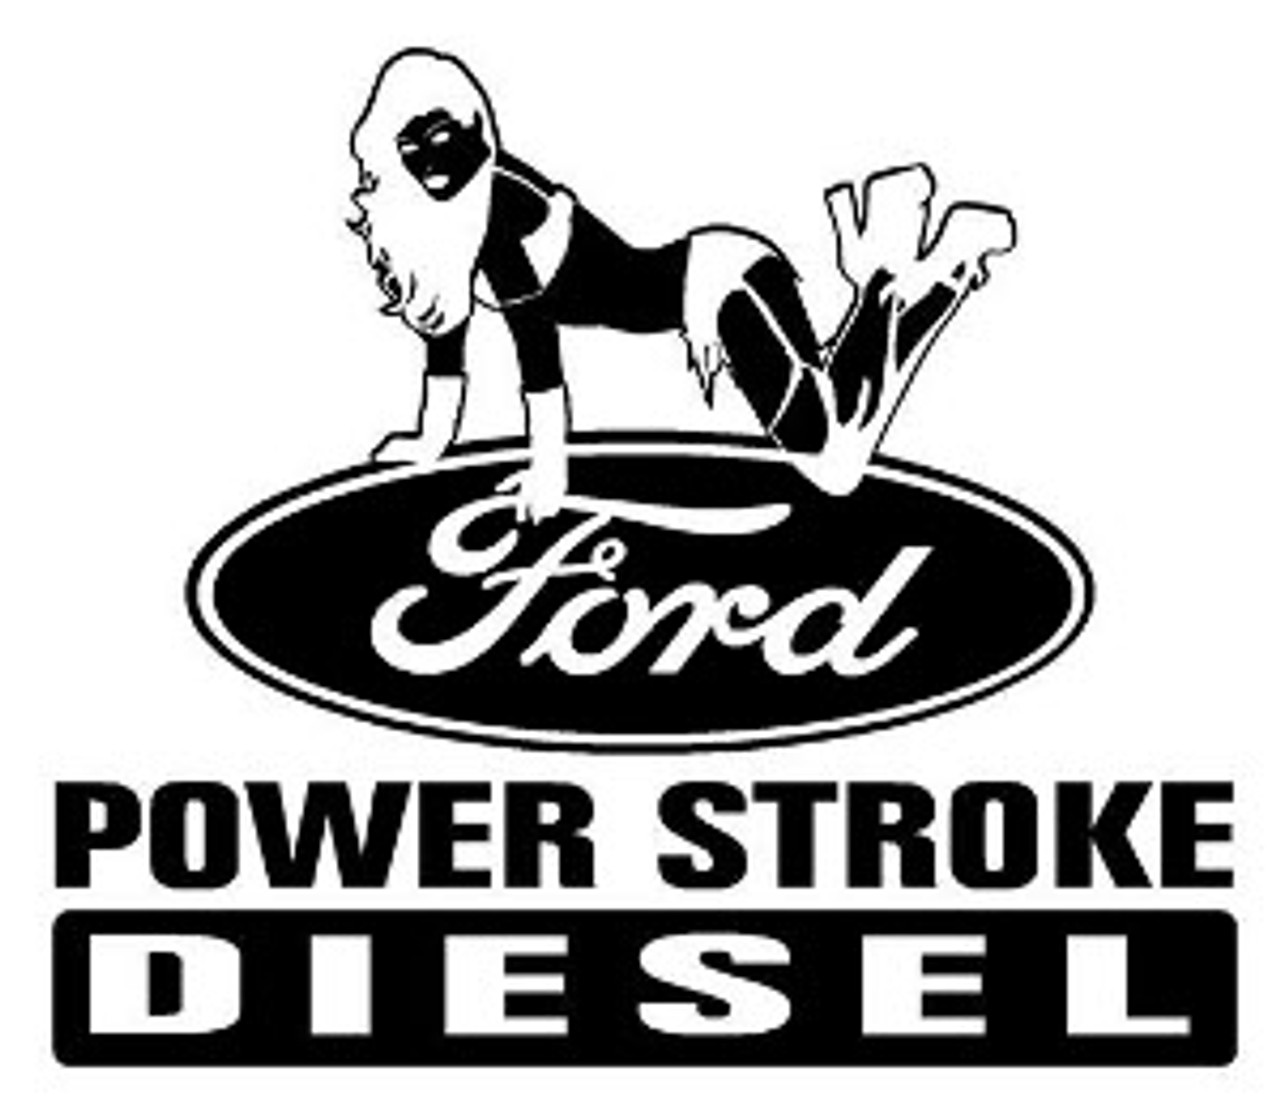 ford powerstroke diesel logo